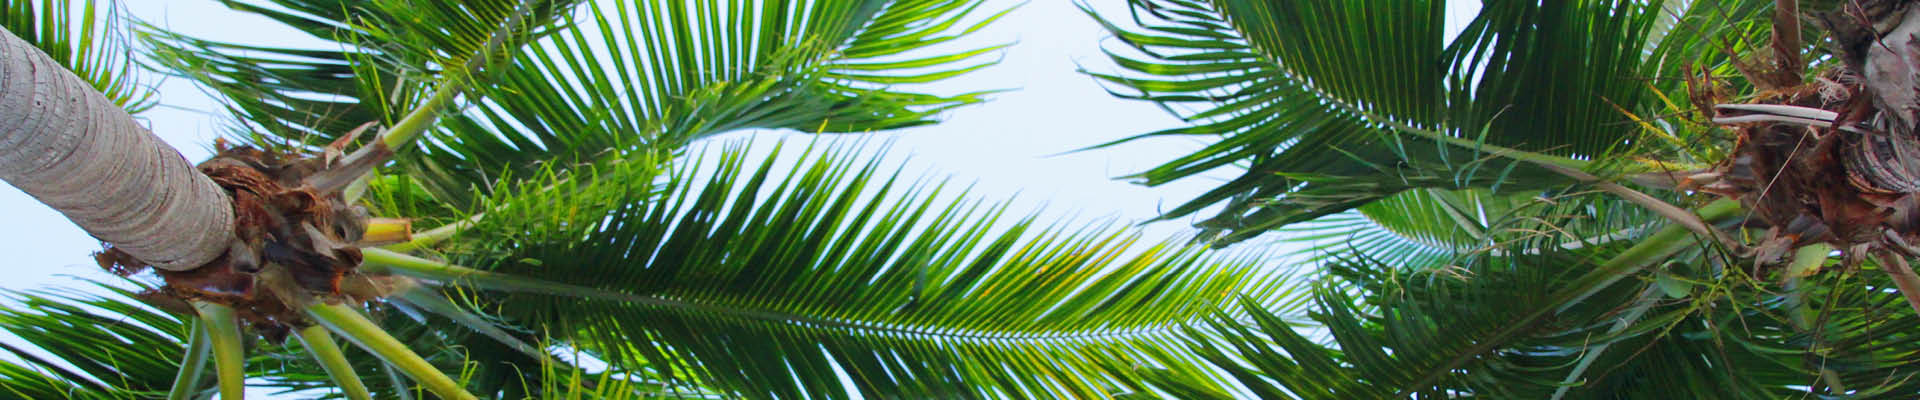 Underside of Palm Trees